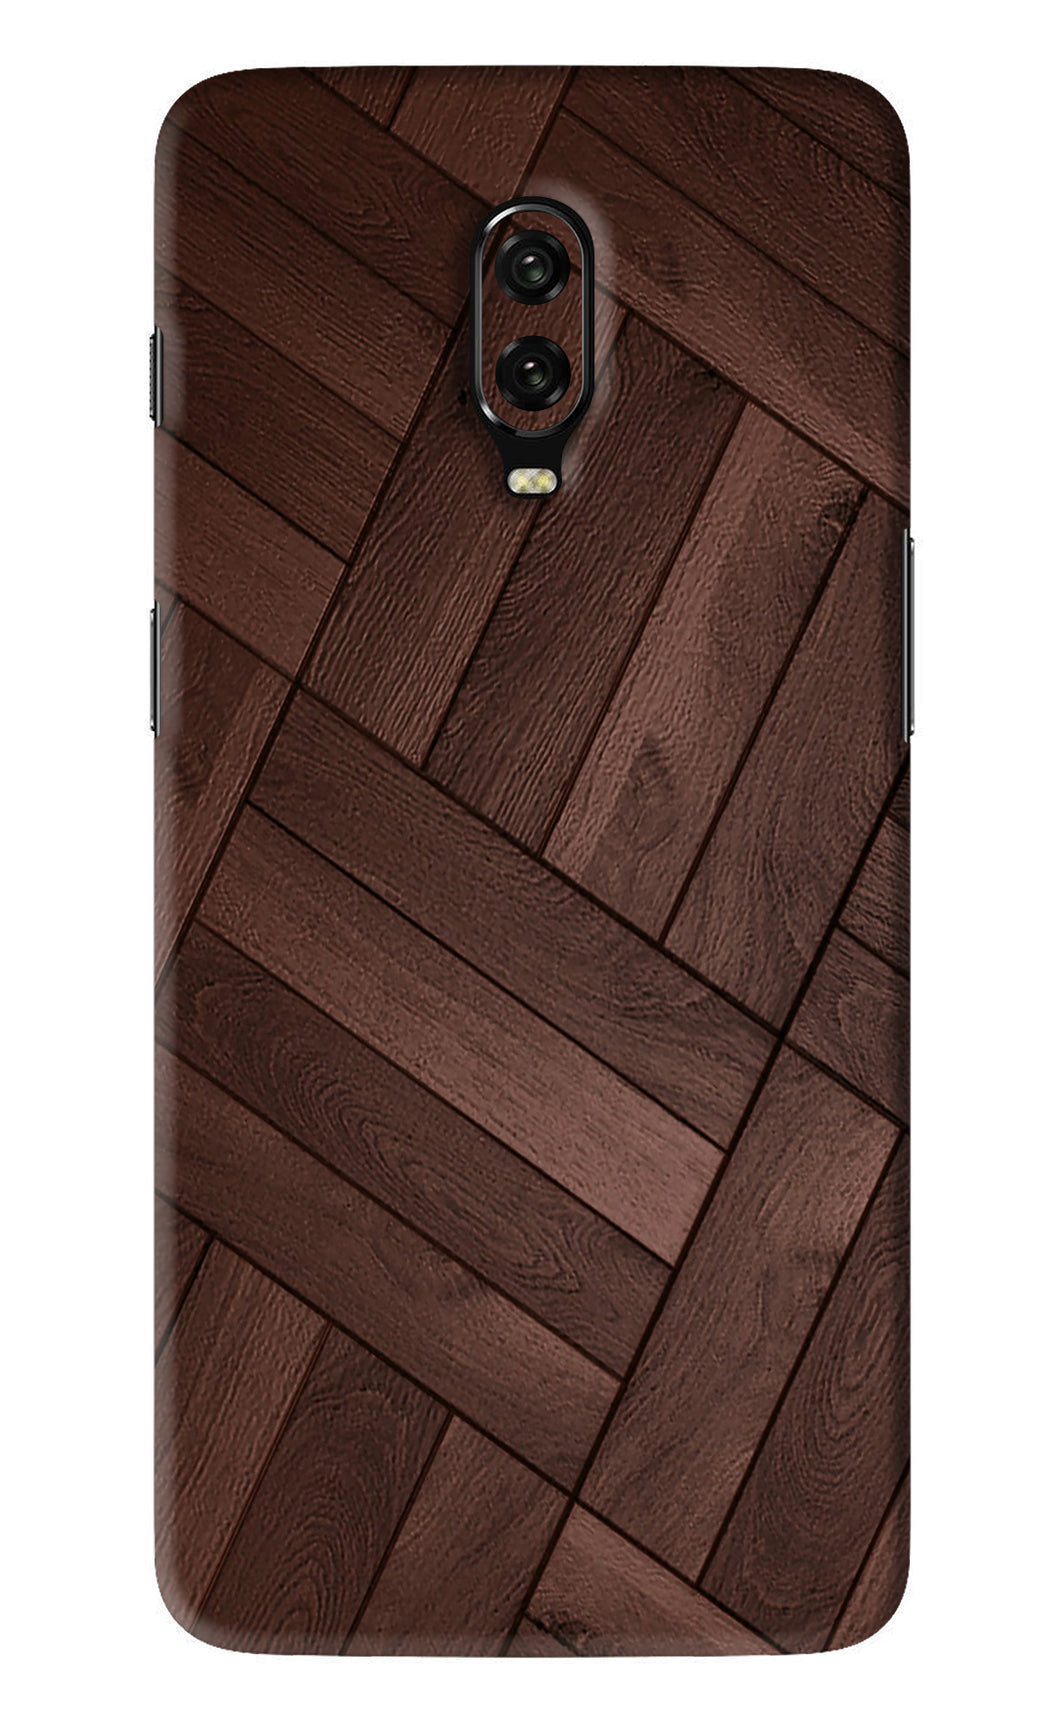 Wooden Texture Design OnePlus 6T Back Skin Wrap